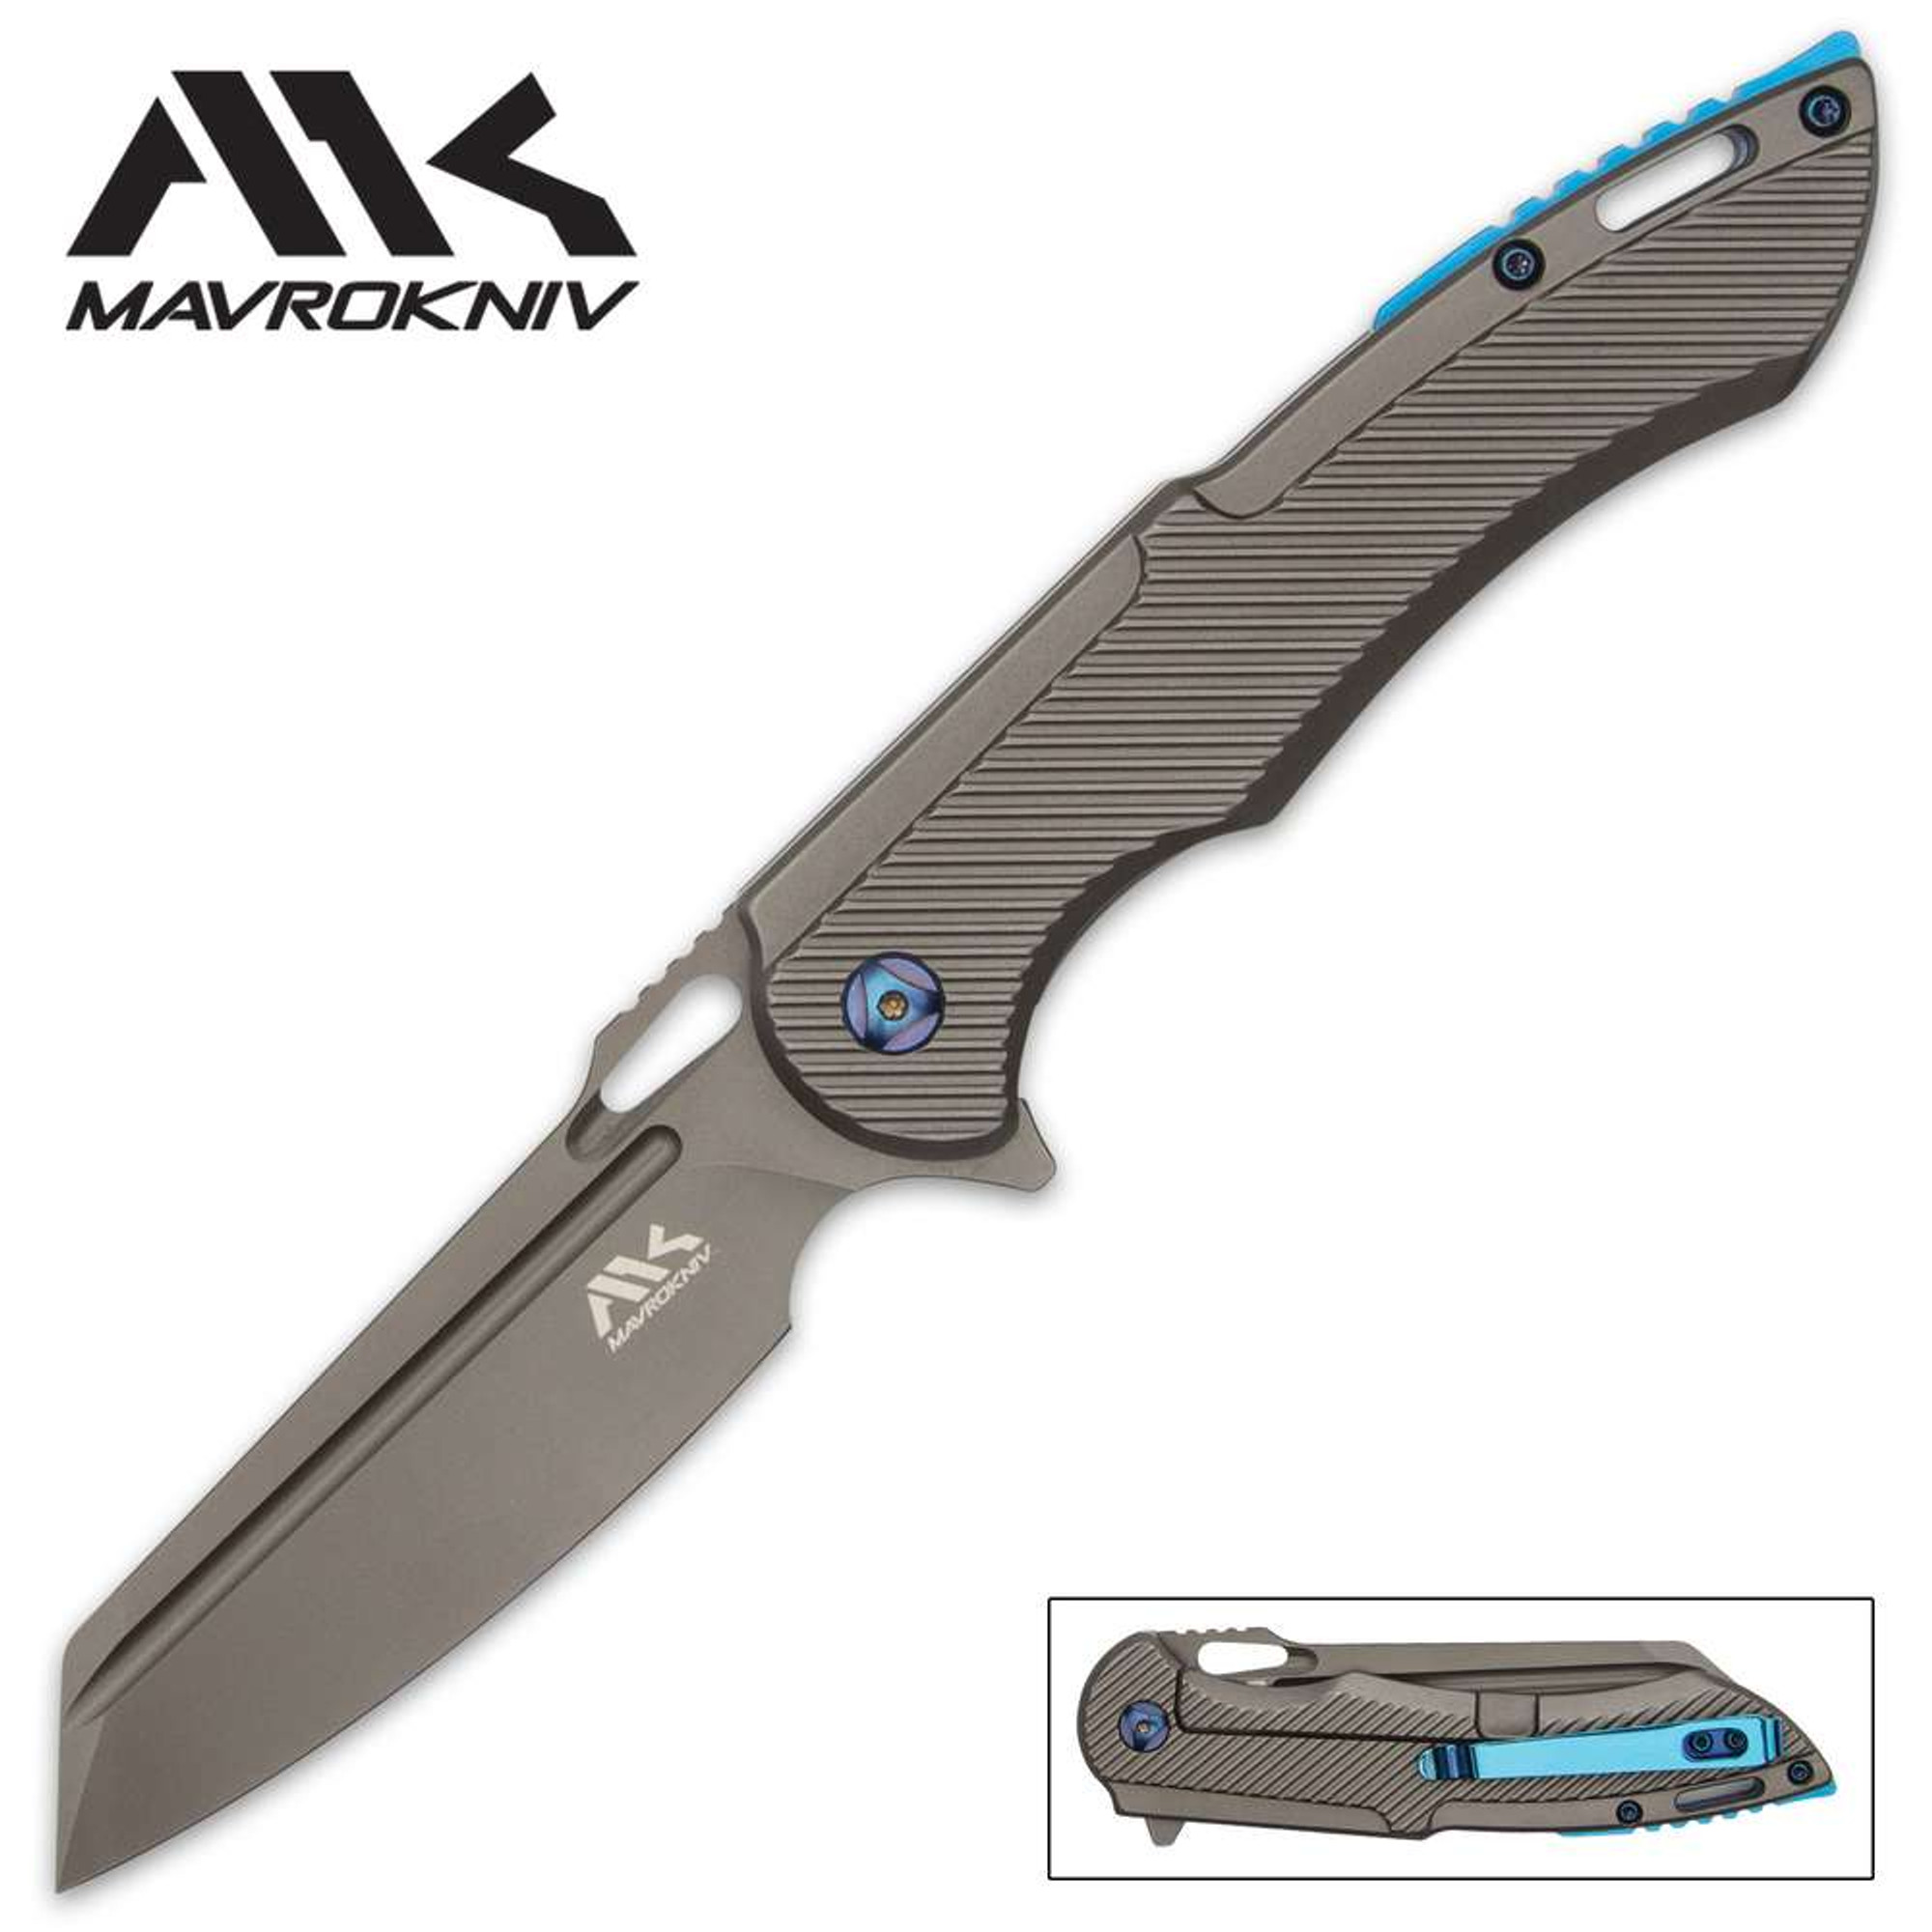 Mavrokniv Mechanix Pocket Knife - D2 Tool Steel